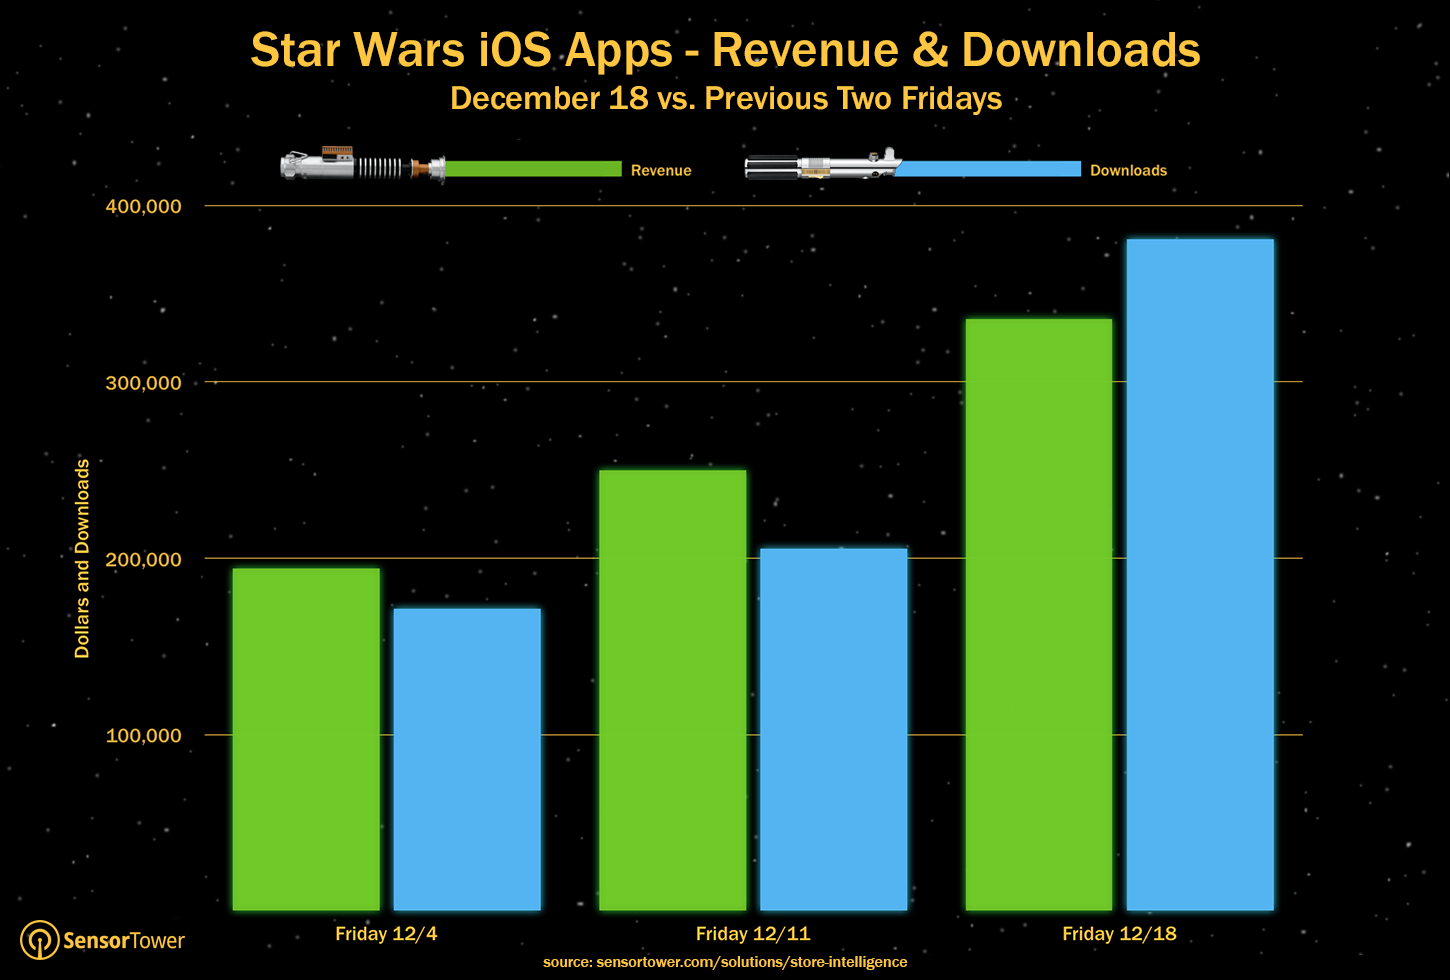 Star Wars Apps Revenue & Downloads - December 18